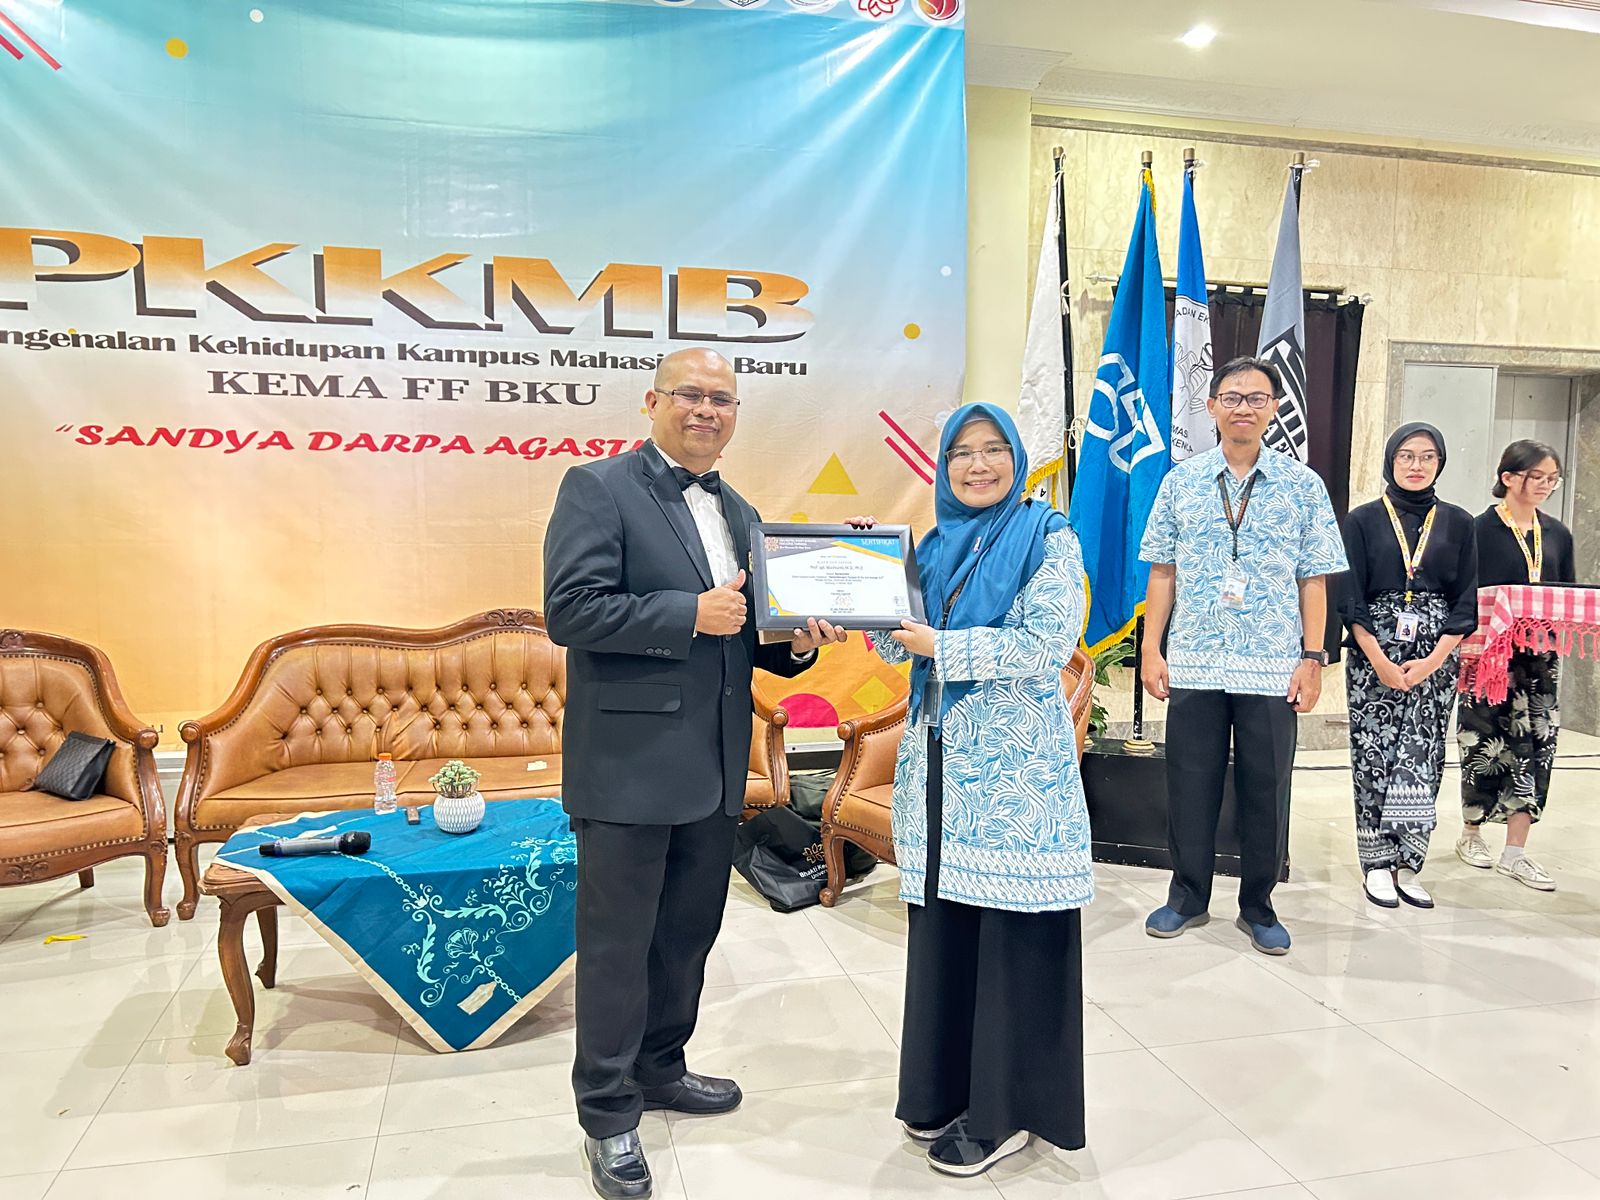 PKKMB FF UBK Mengundang Guru Besar dari Universitas Padjadjaran Bandung